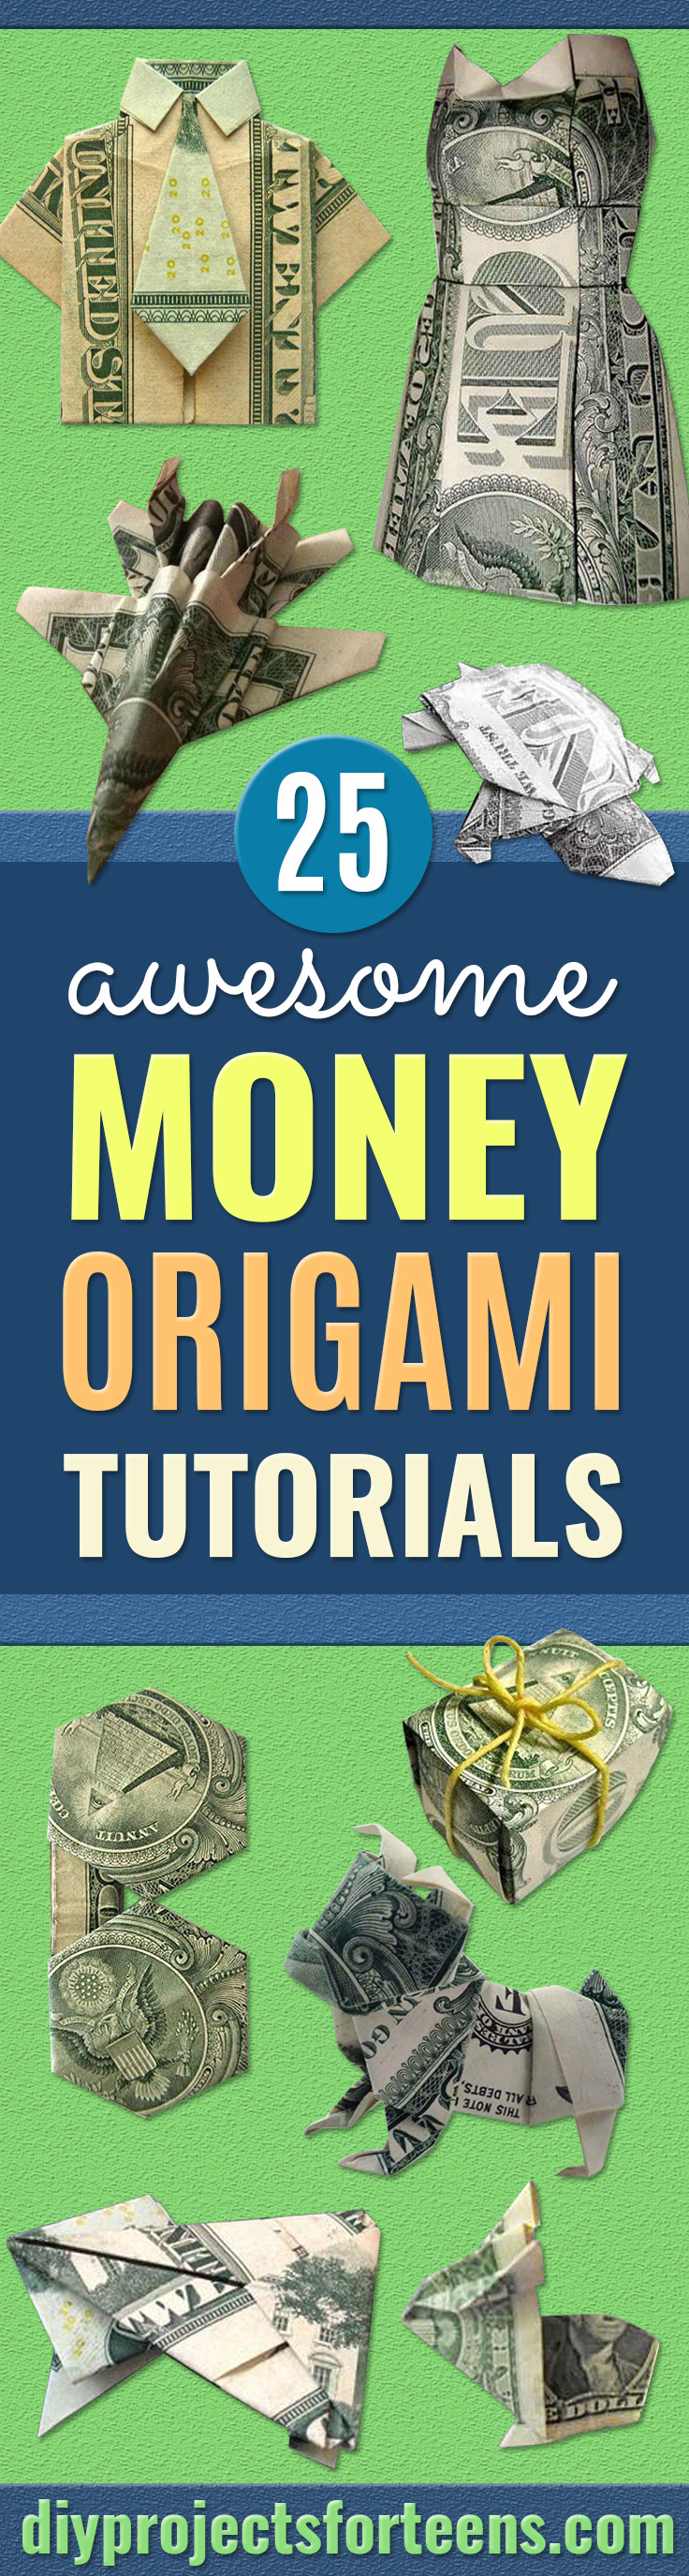 Origami Money Ideas 25 Awesome Money Origami Tutorials